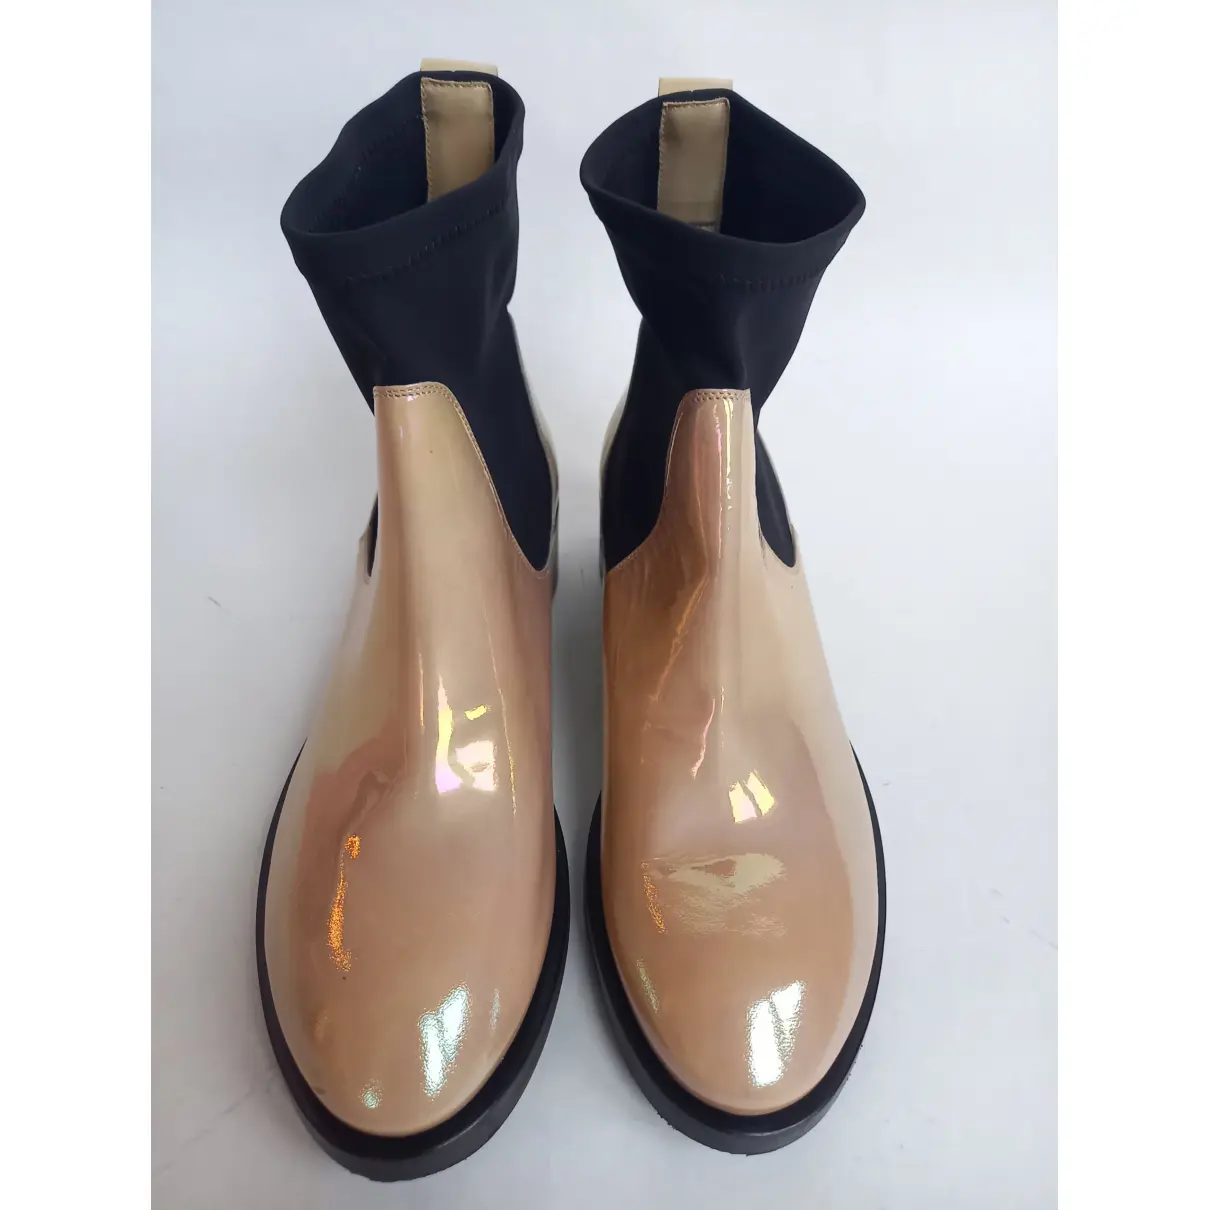 Luxury Acne Studios Ankle boots Women